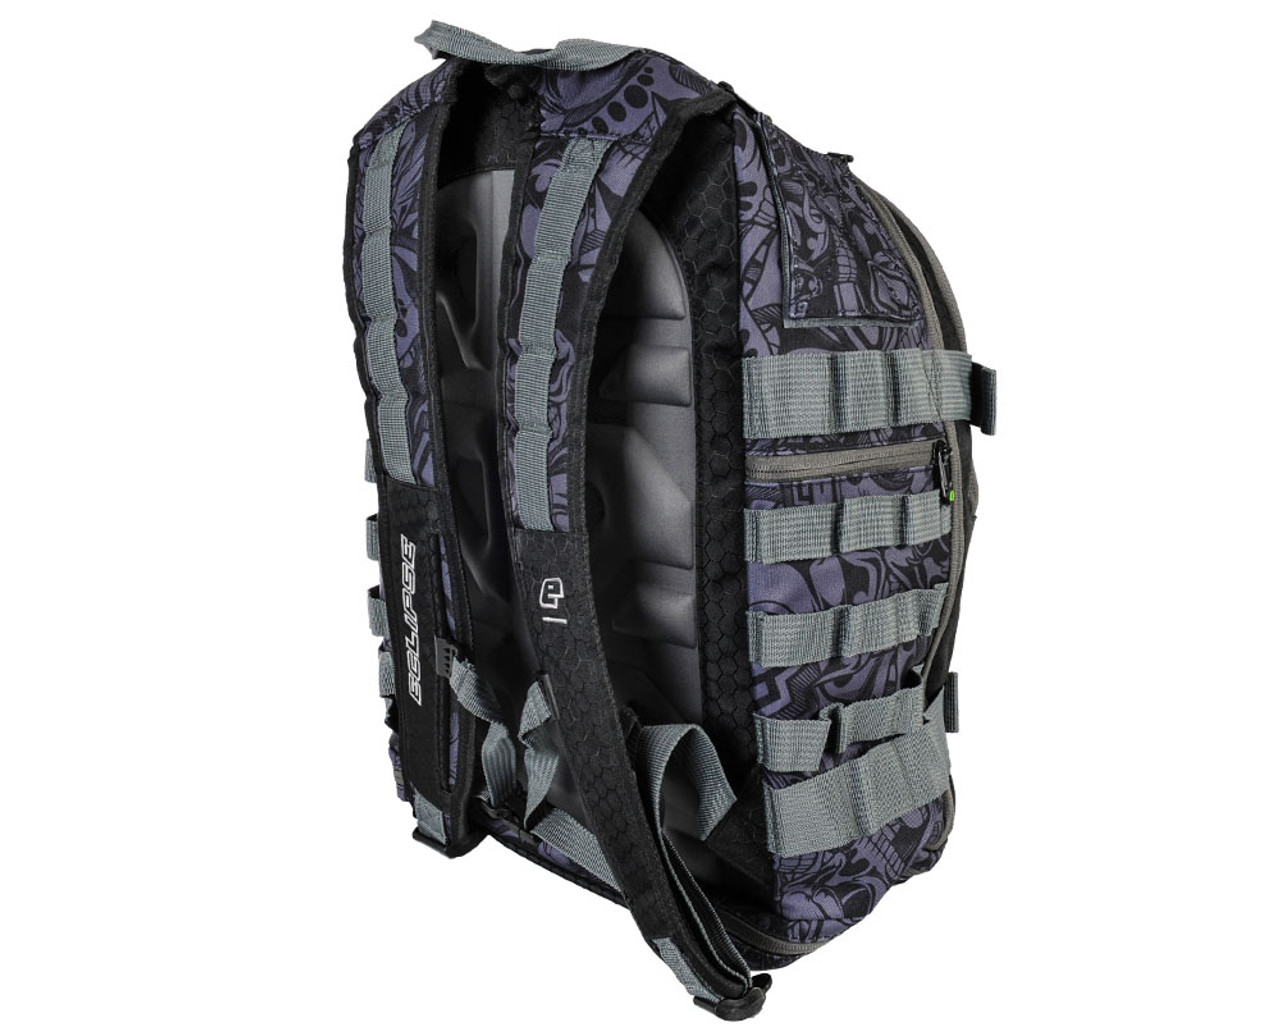 Planet Eclipse GX2 Expand Backpack Gear Bag Titan-Black-Grey